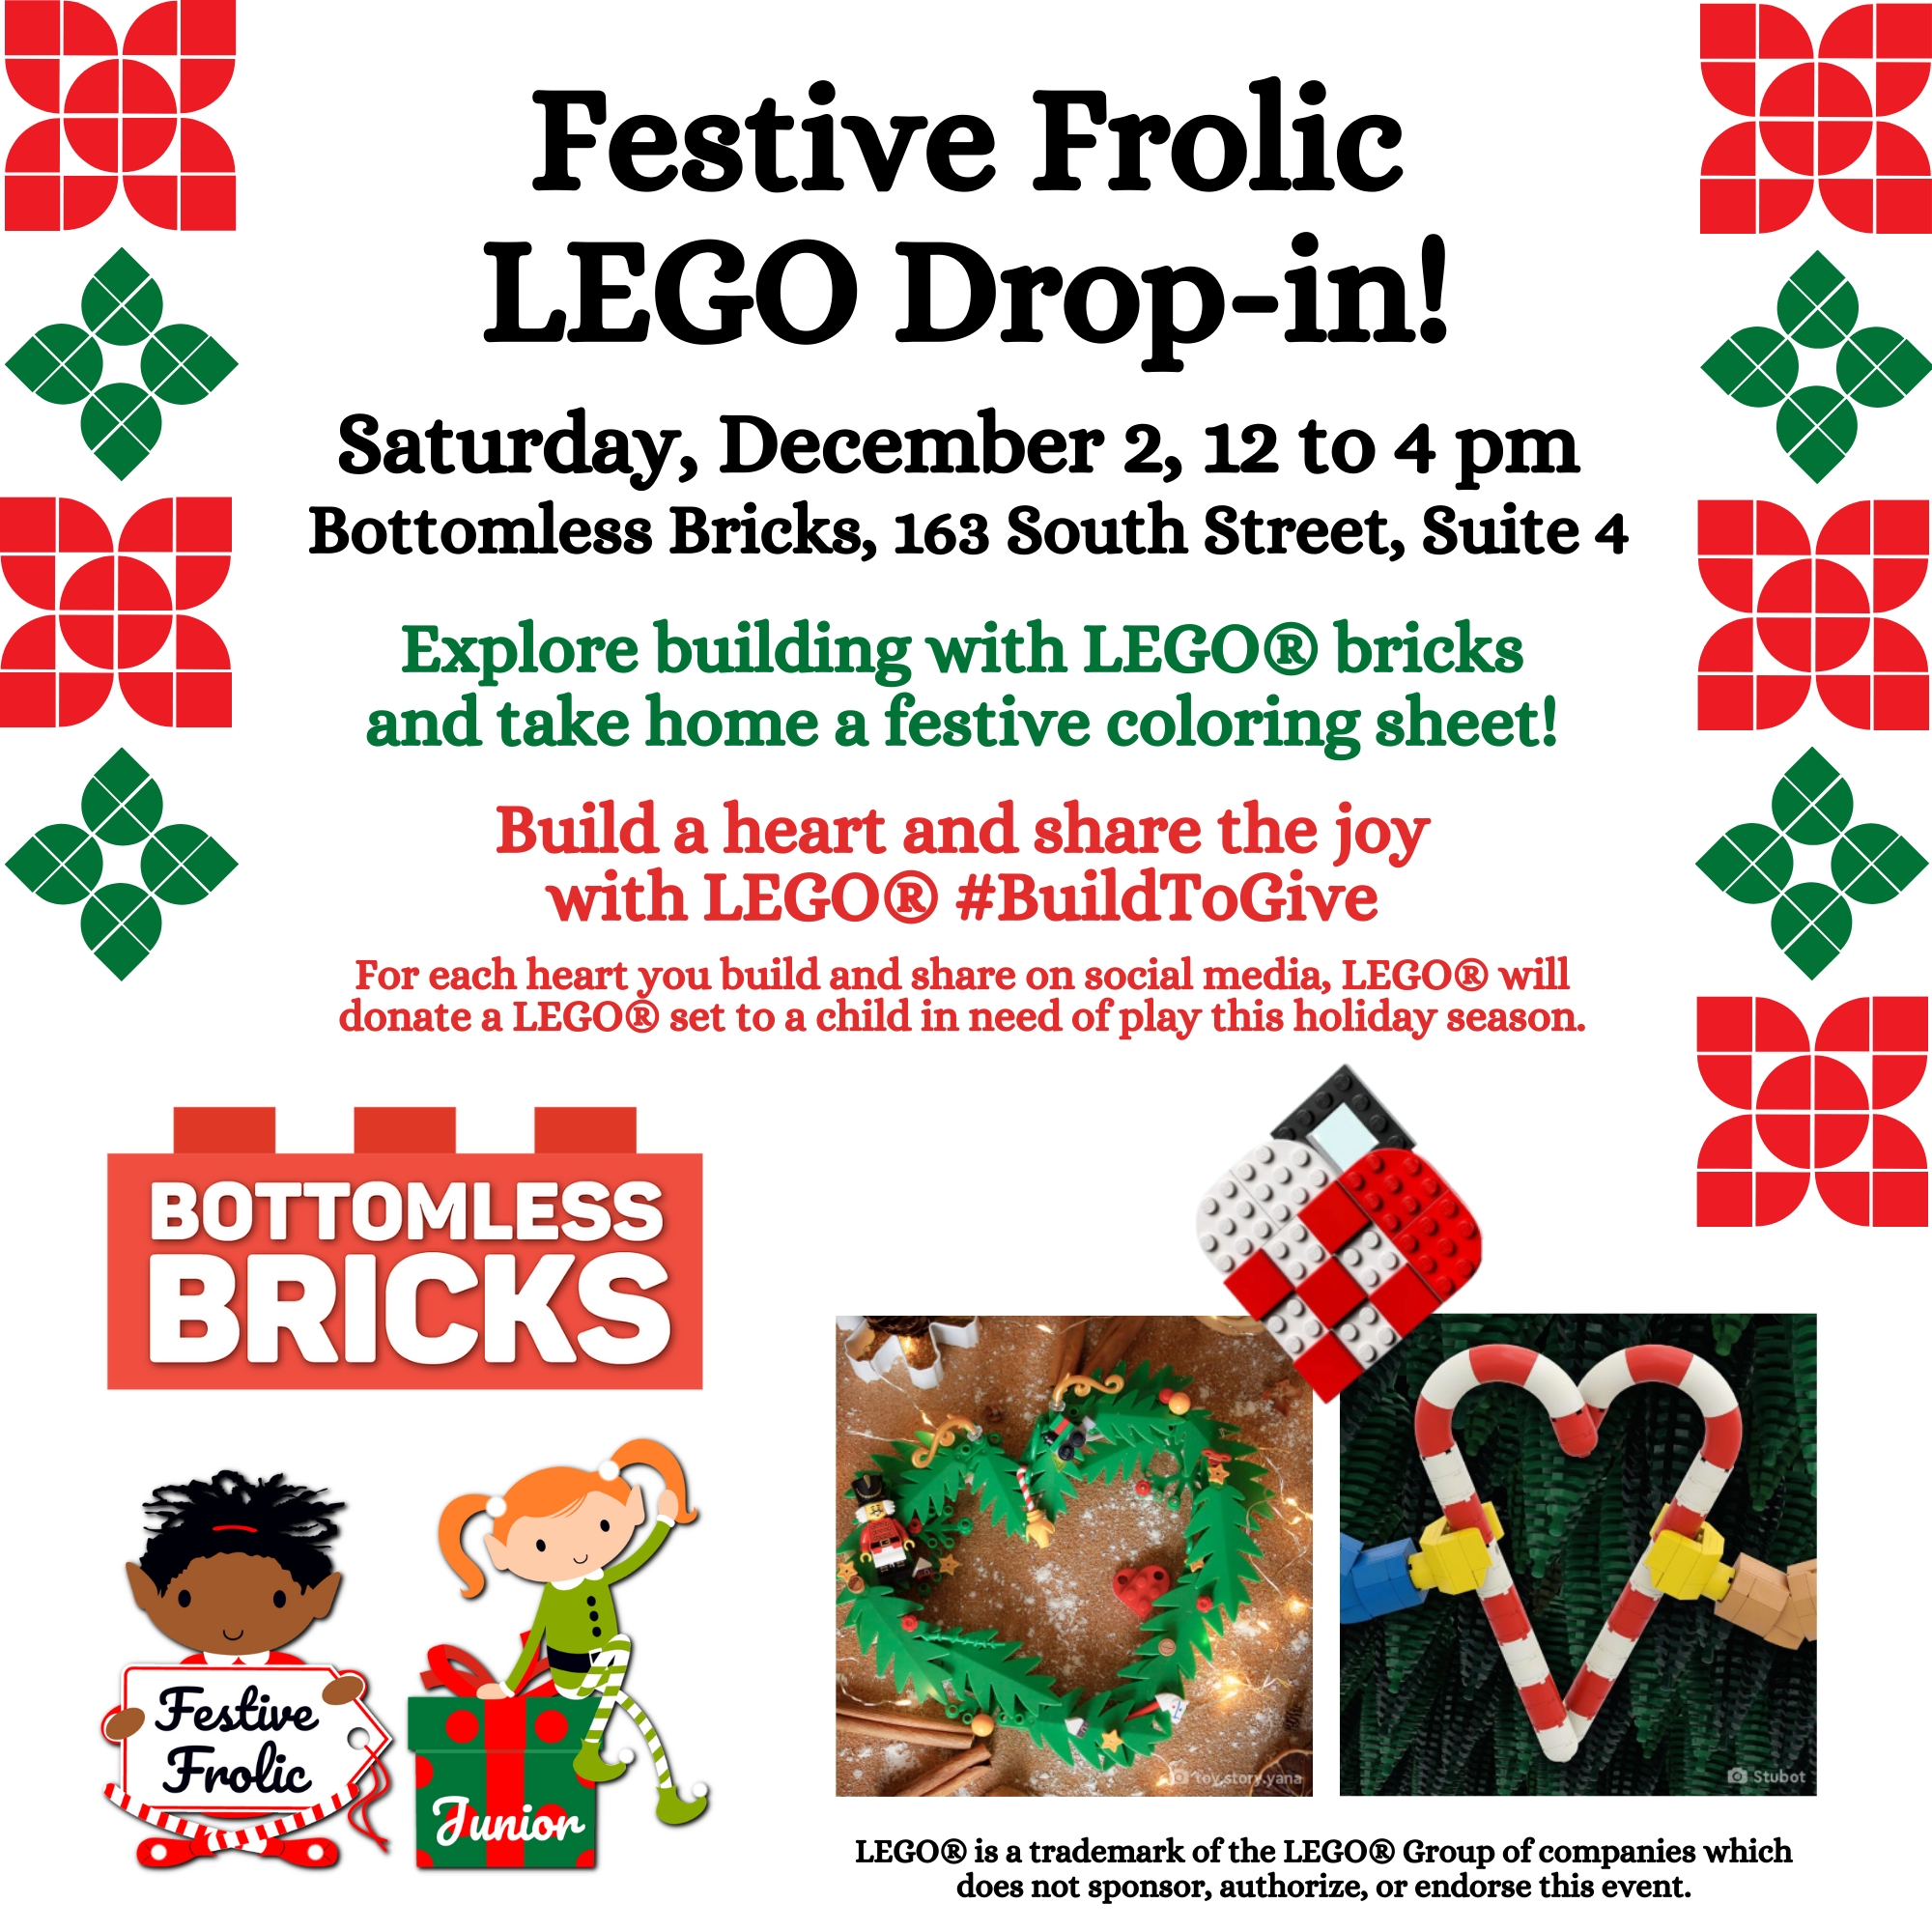 Festive Frolic LEGO Drop-in at Bottomless Bricks